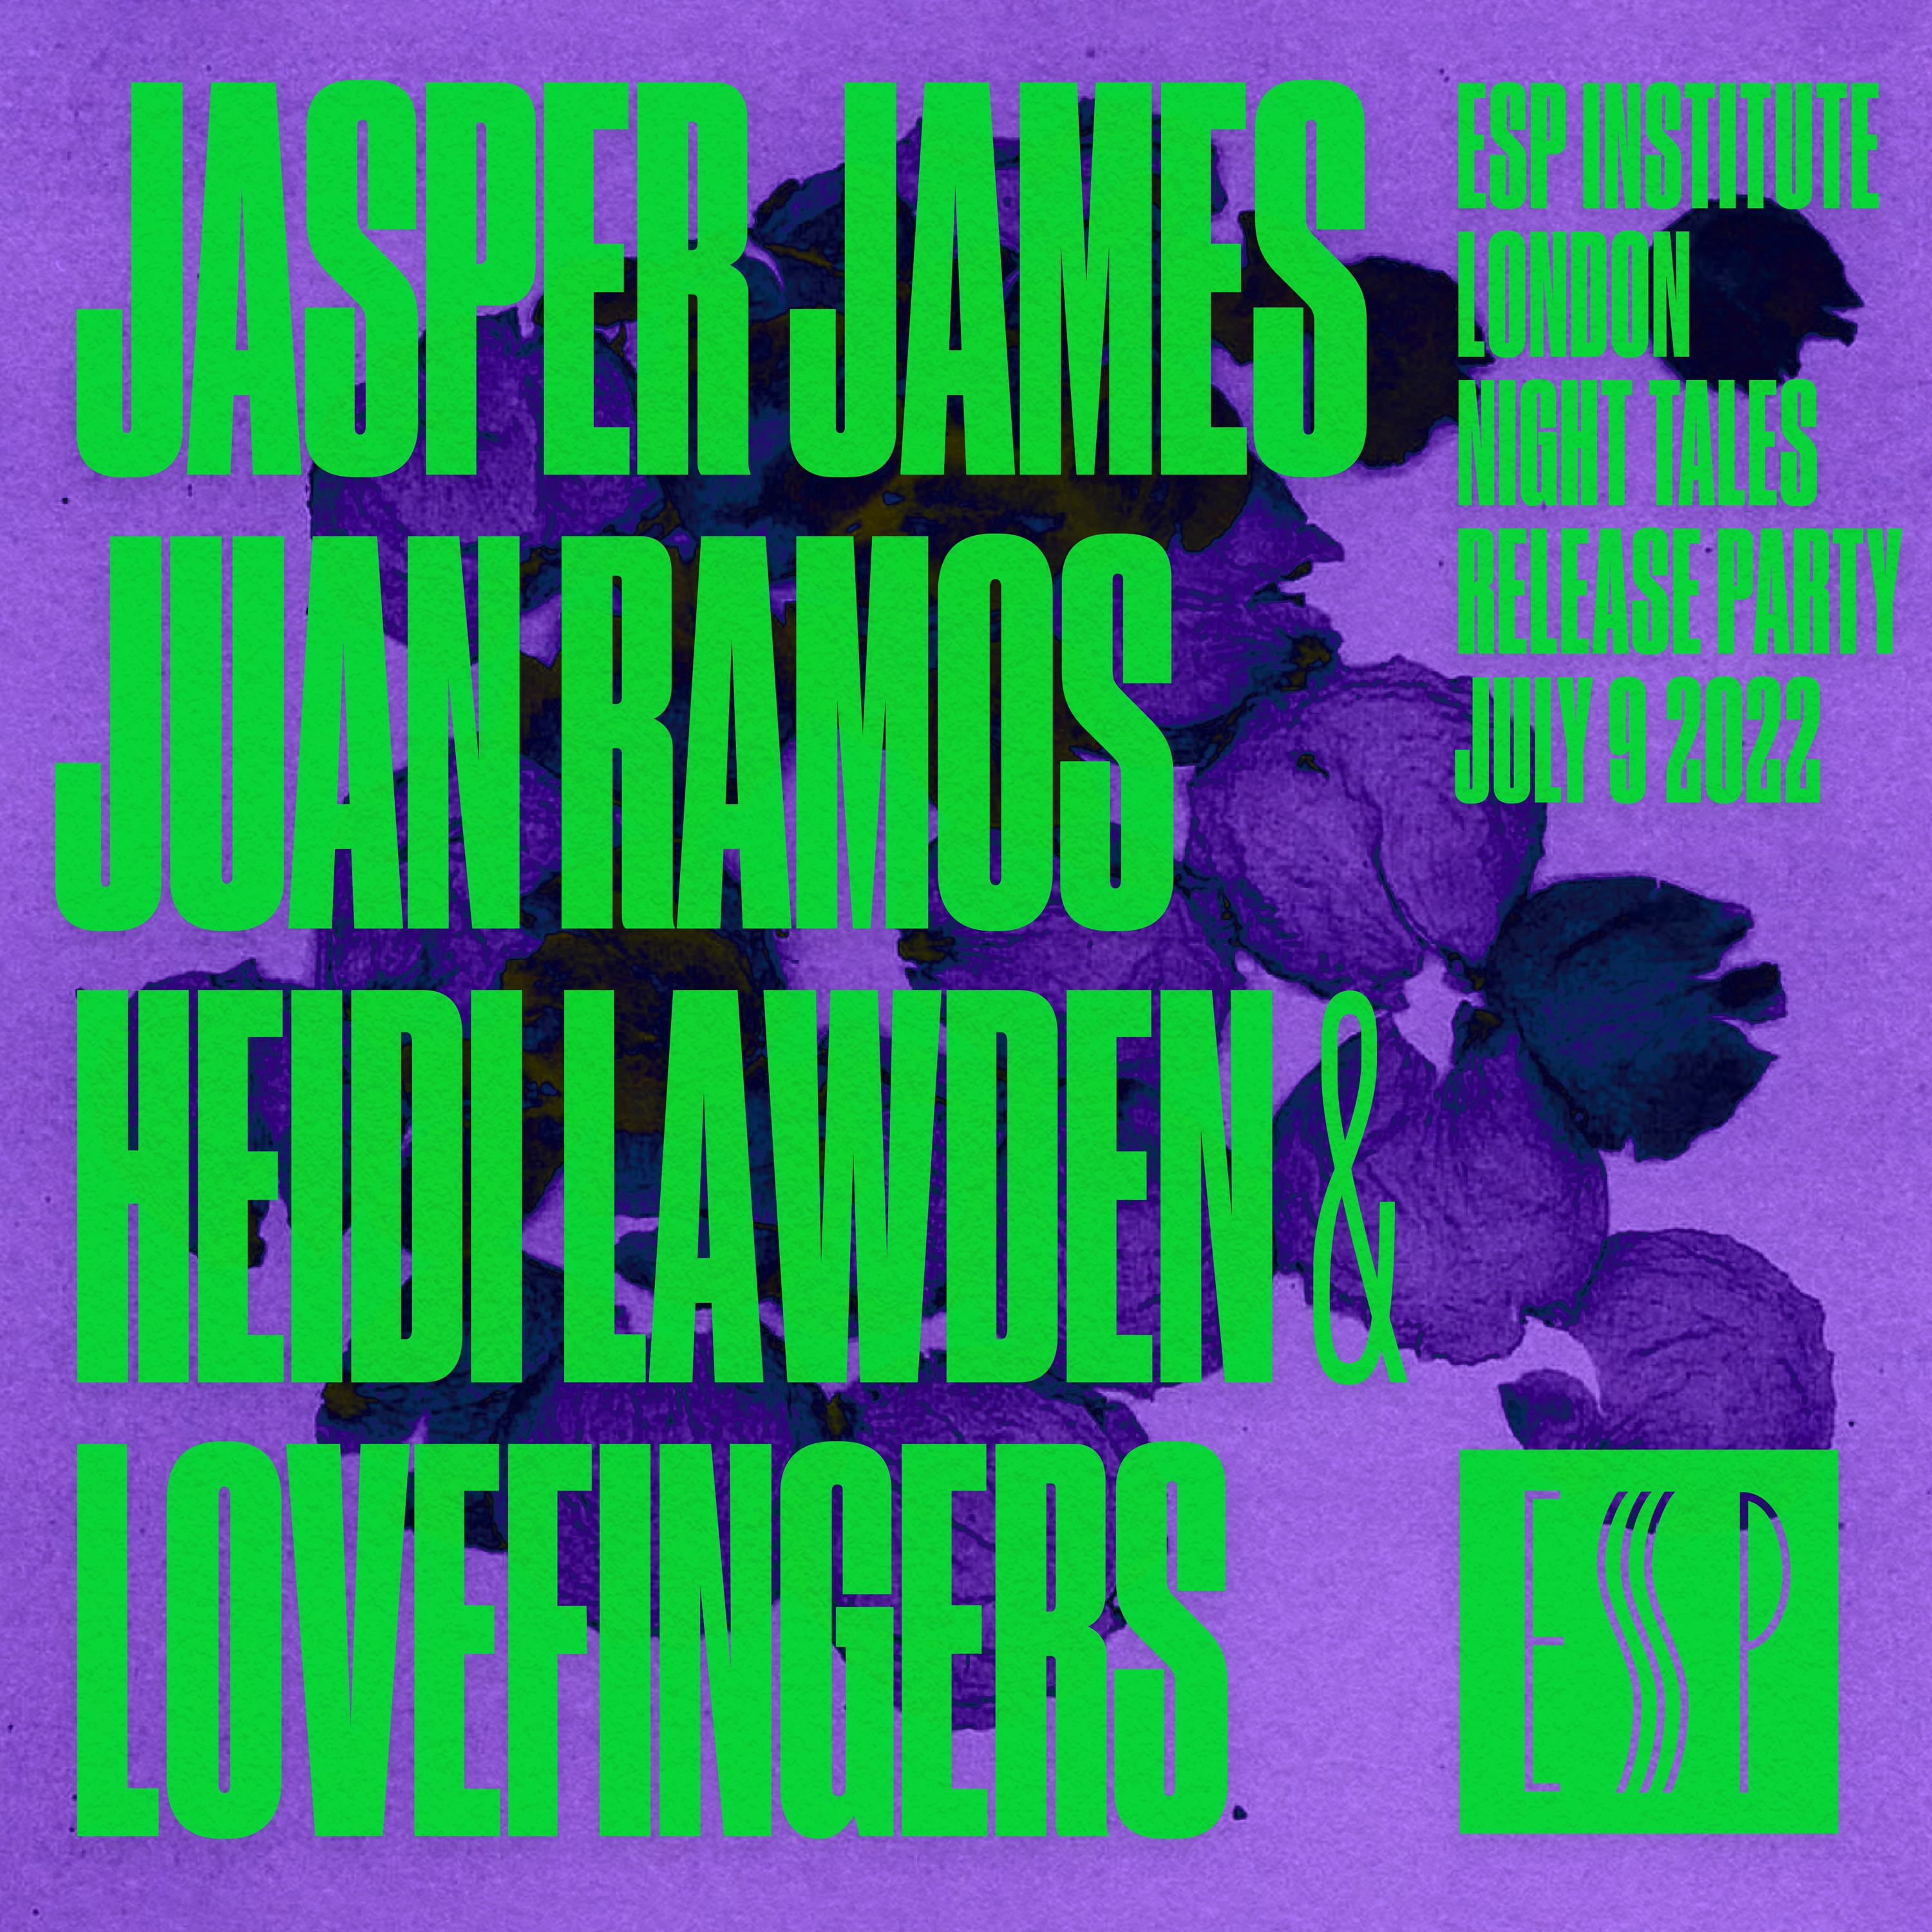 Night Tales x ESP Institute: Lovefingers, Heidi Lawden, Jasper James & Juan Ramos - Flyer front